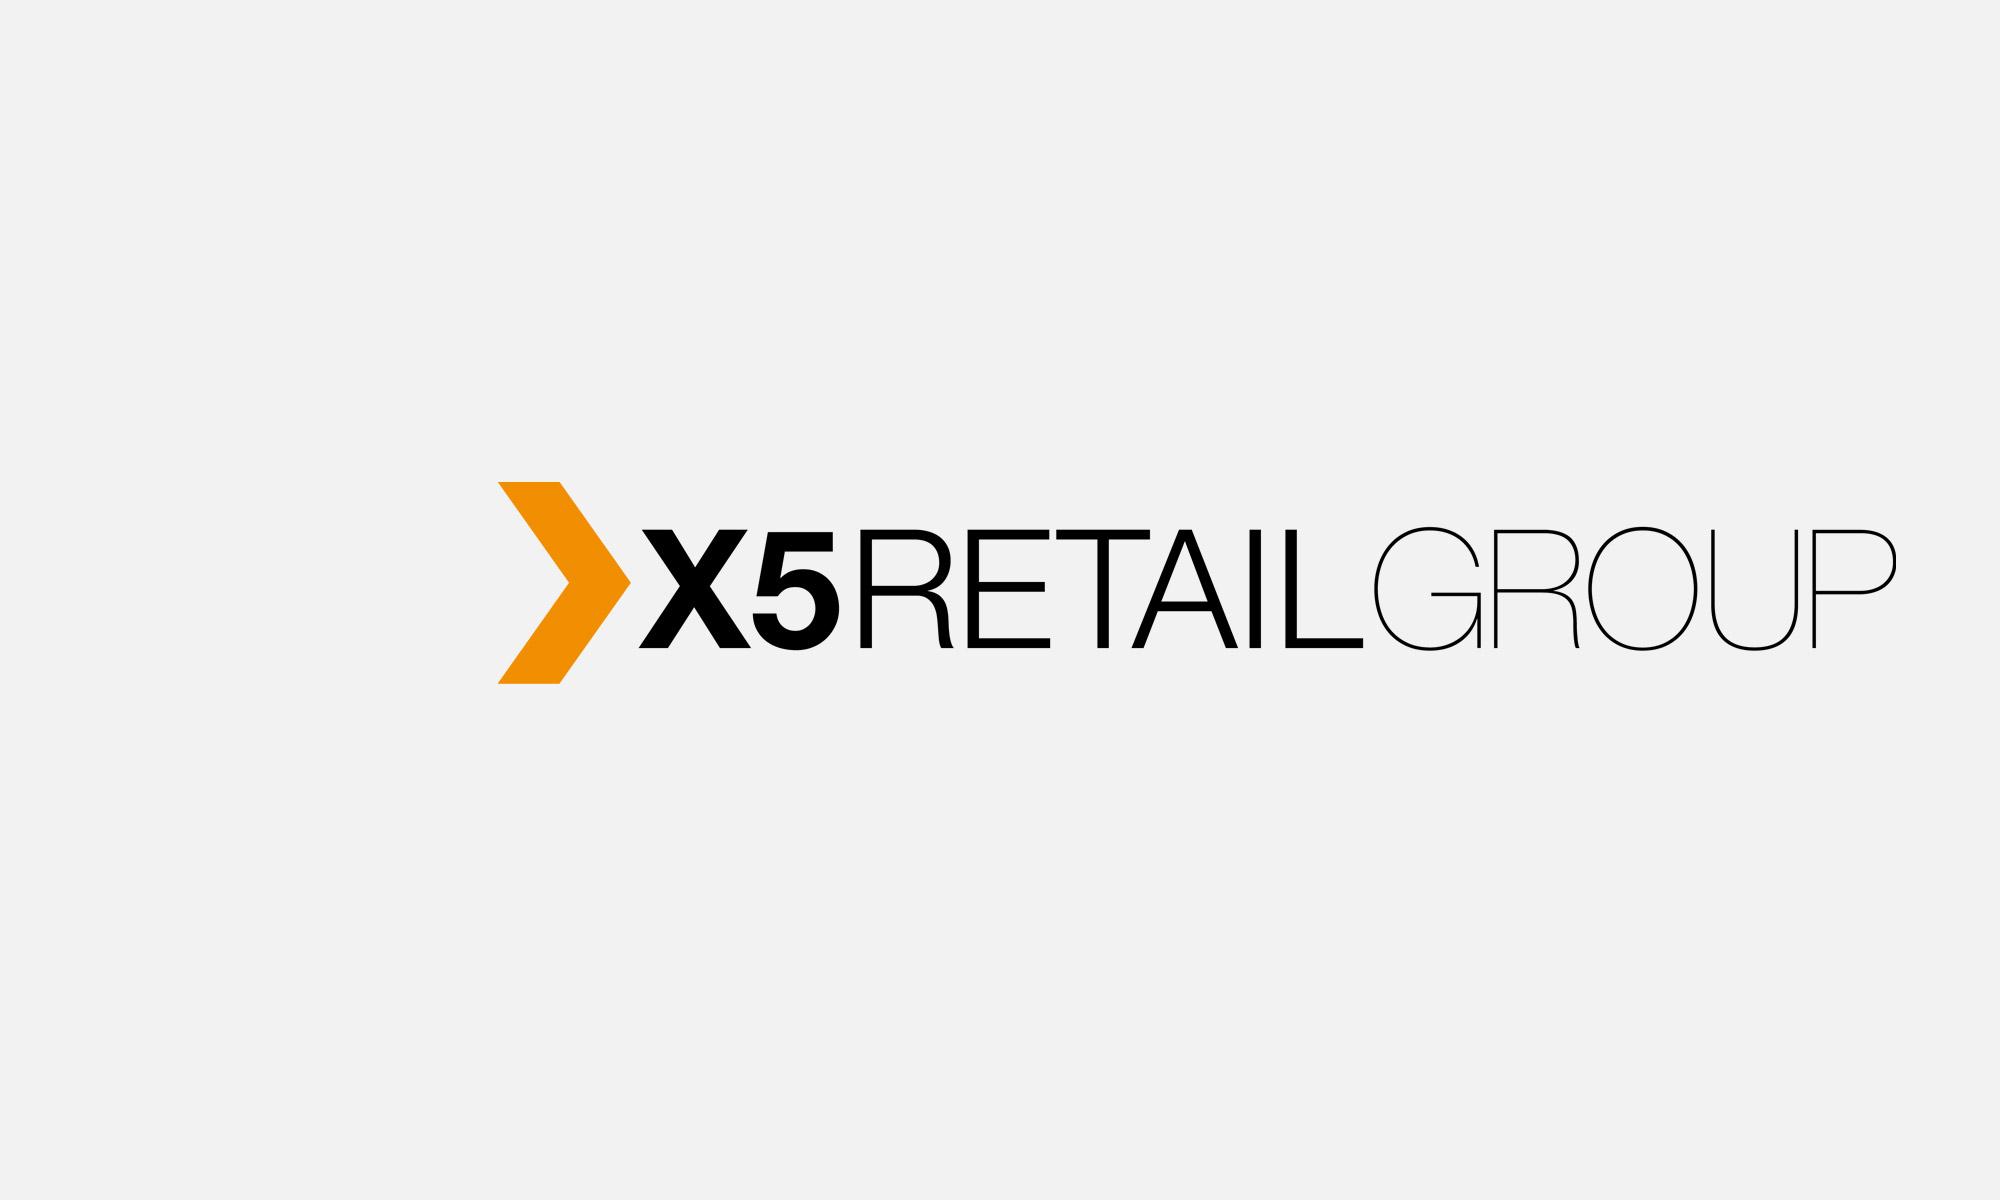 X5 group инн. Х5 Retail Group logo. Группа x5 Retail Group. Х5 Ритейл групп логотип. X5 Retail Group logo PNG.